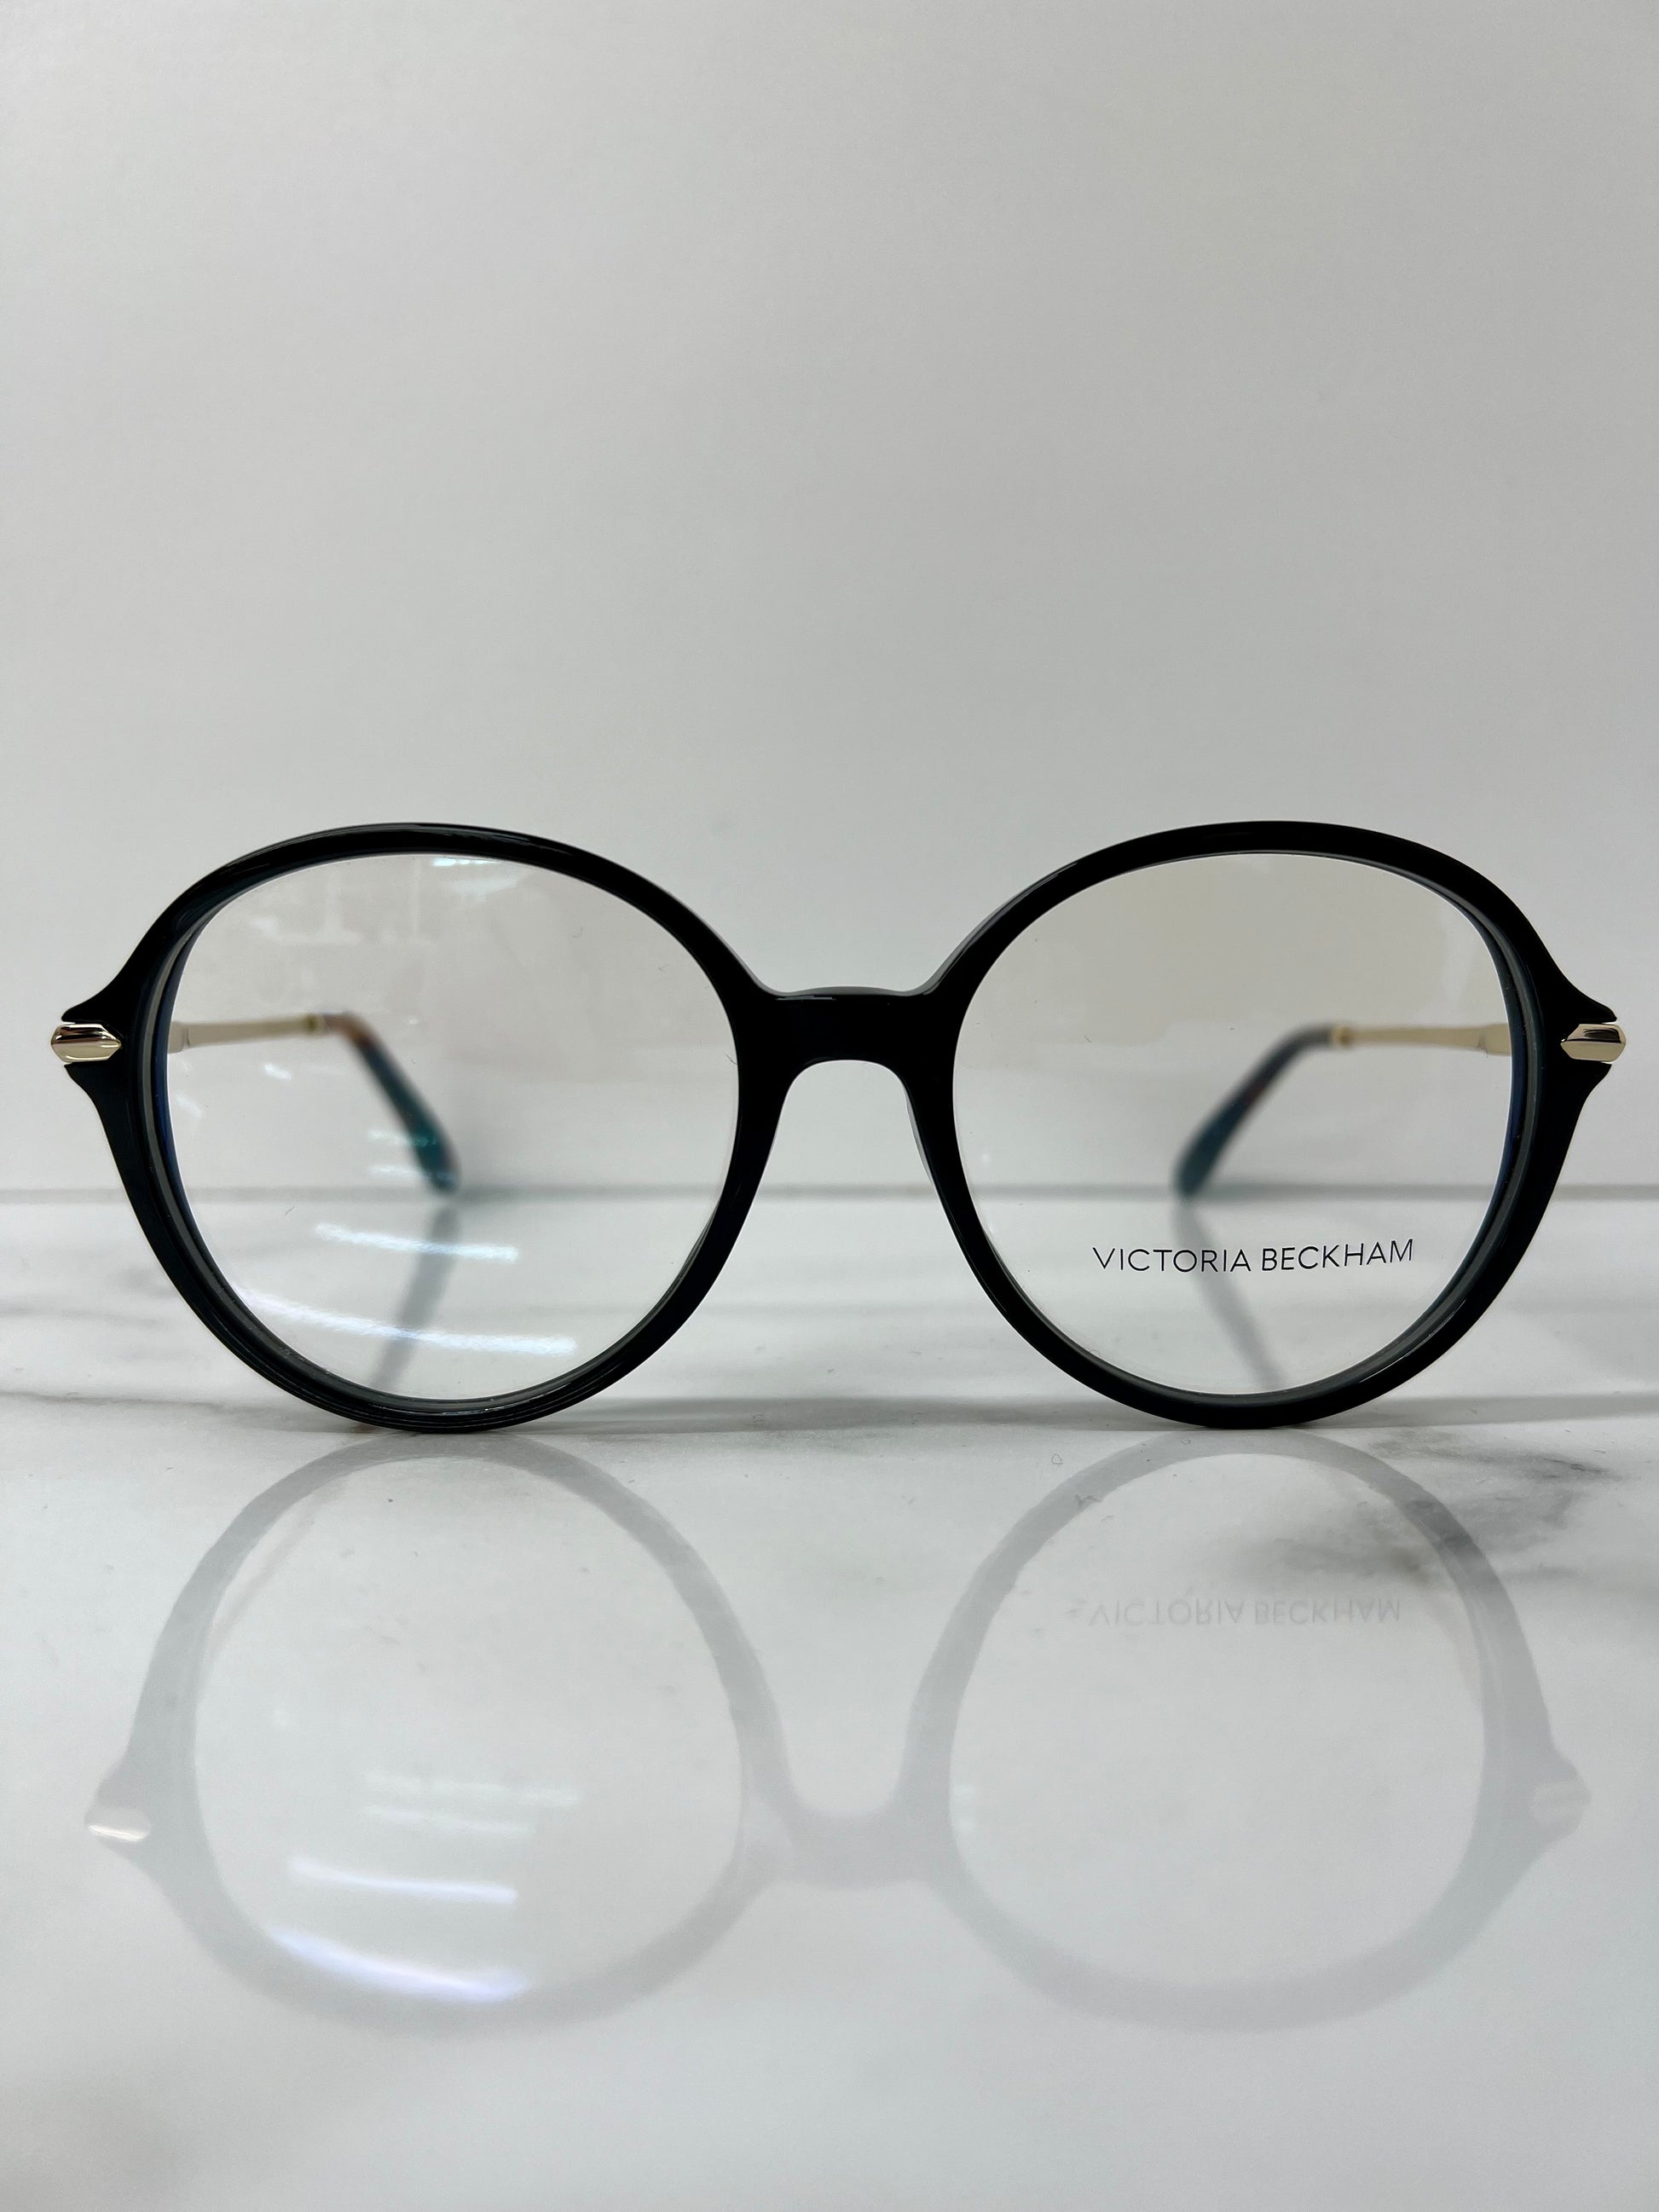 Victoria Beckham Glasses Frames Optical Black Round Gold Eyeglasses VB2637